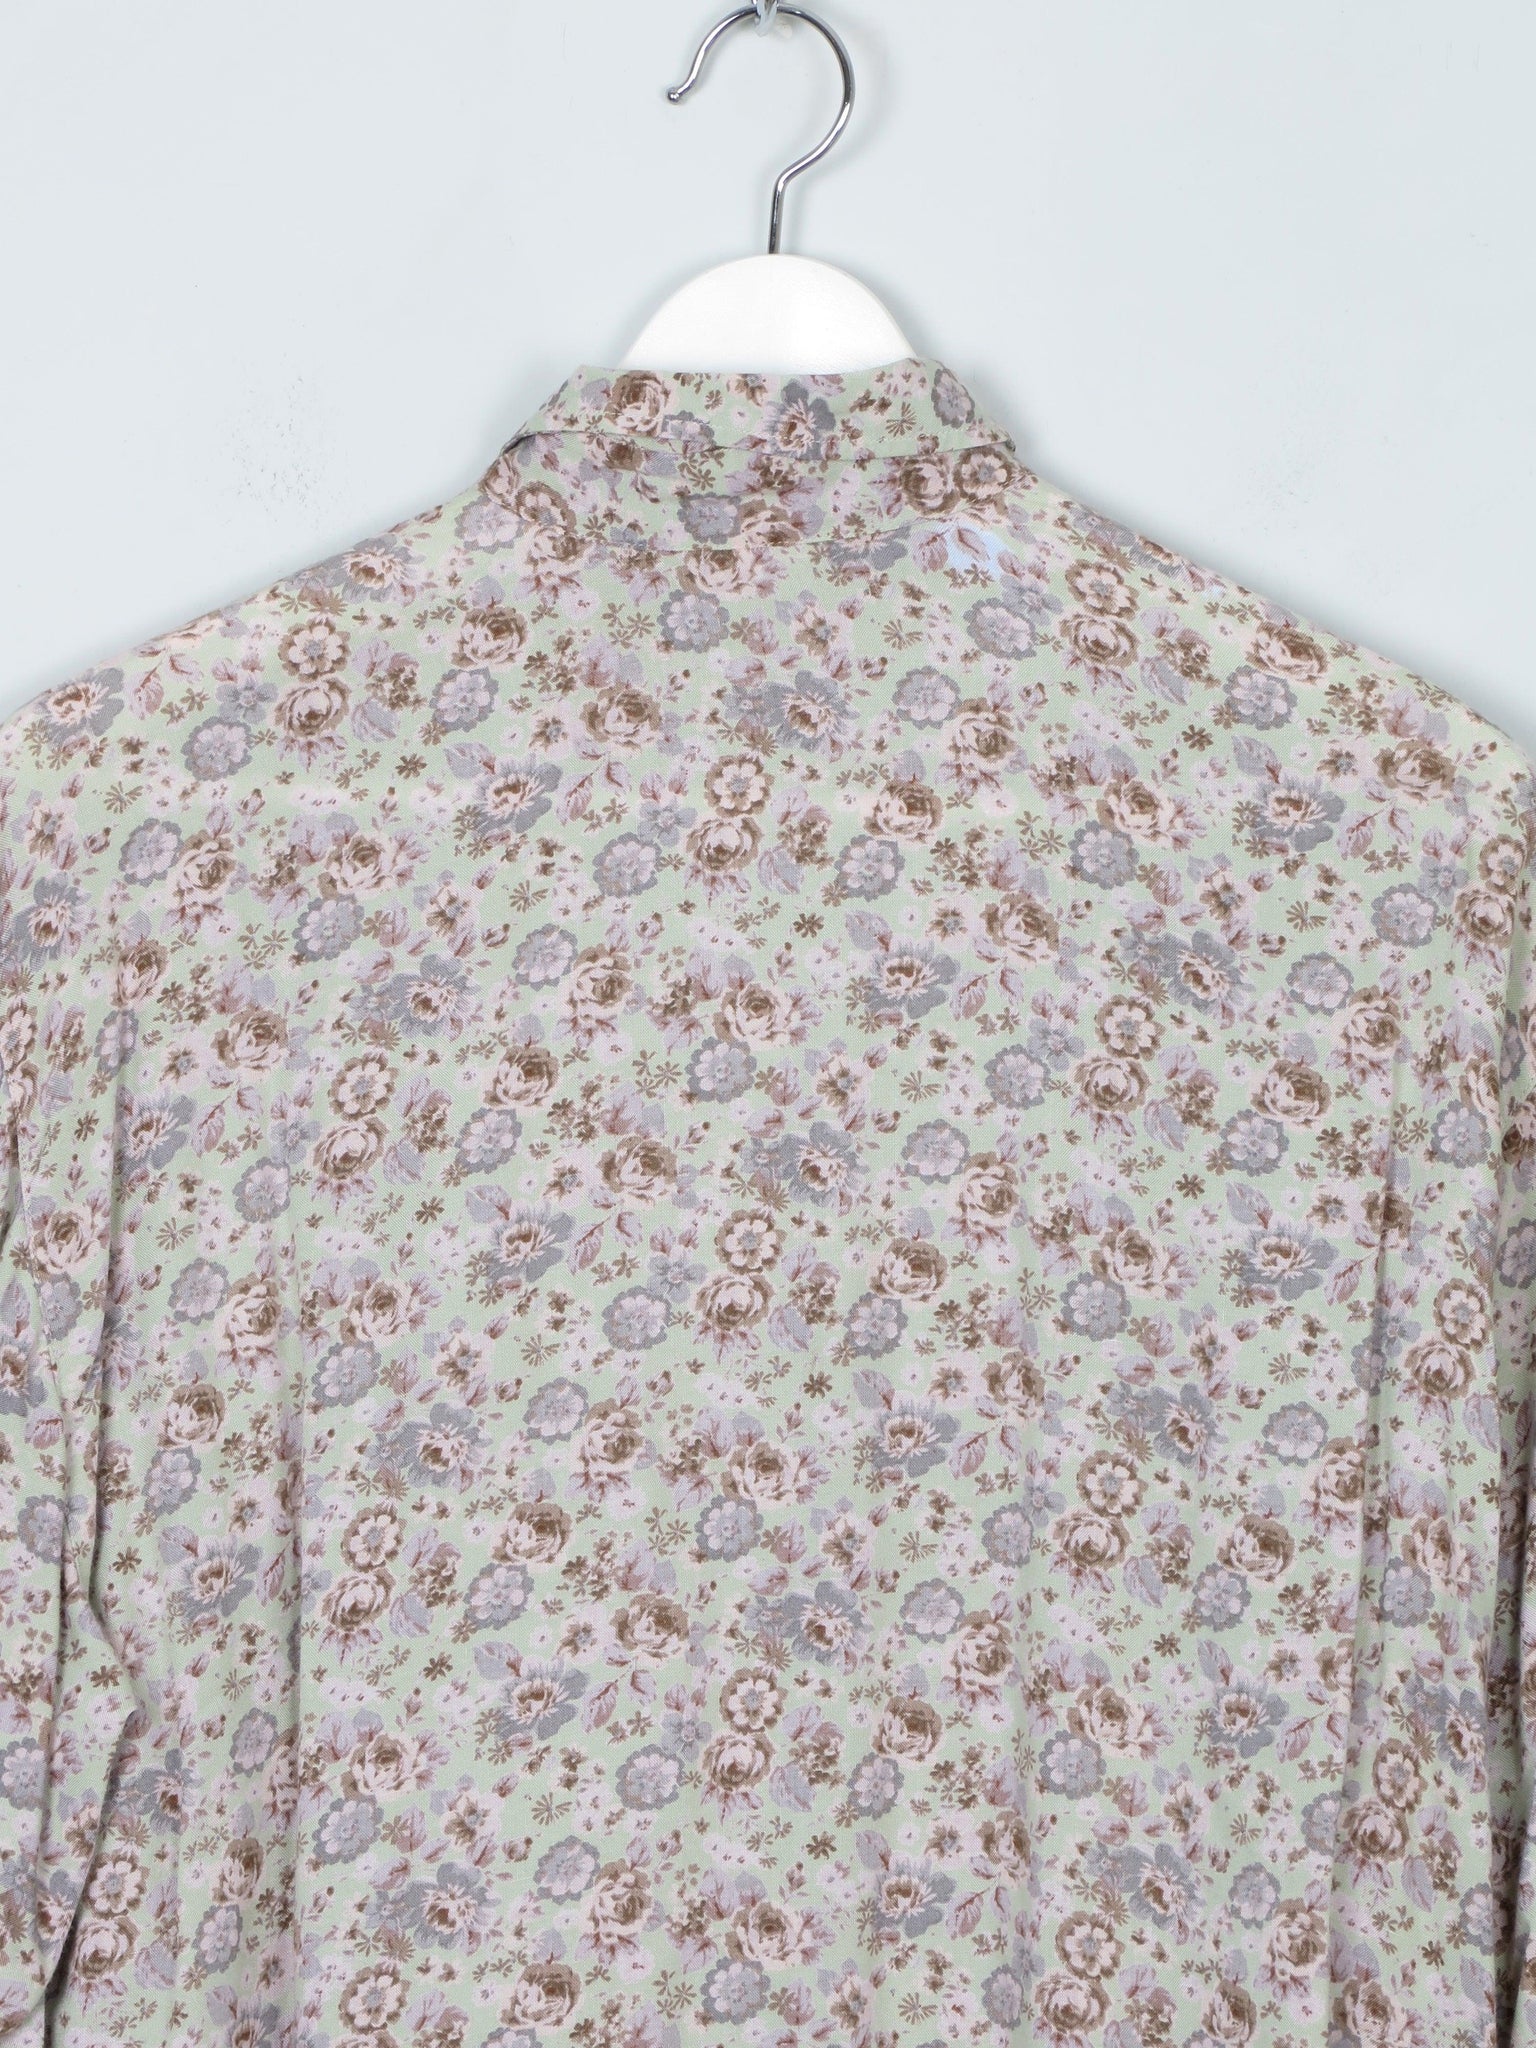 Botanical Print Prairie Benetton Shirt- Blouse S/M